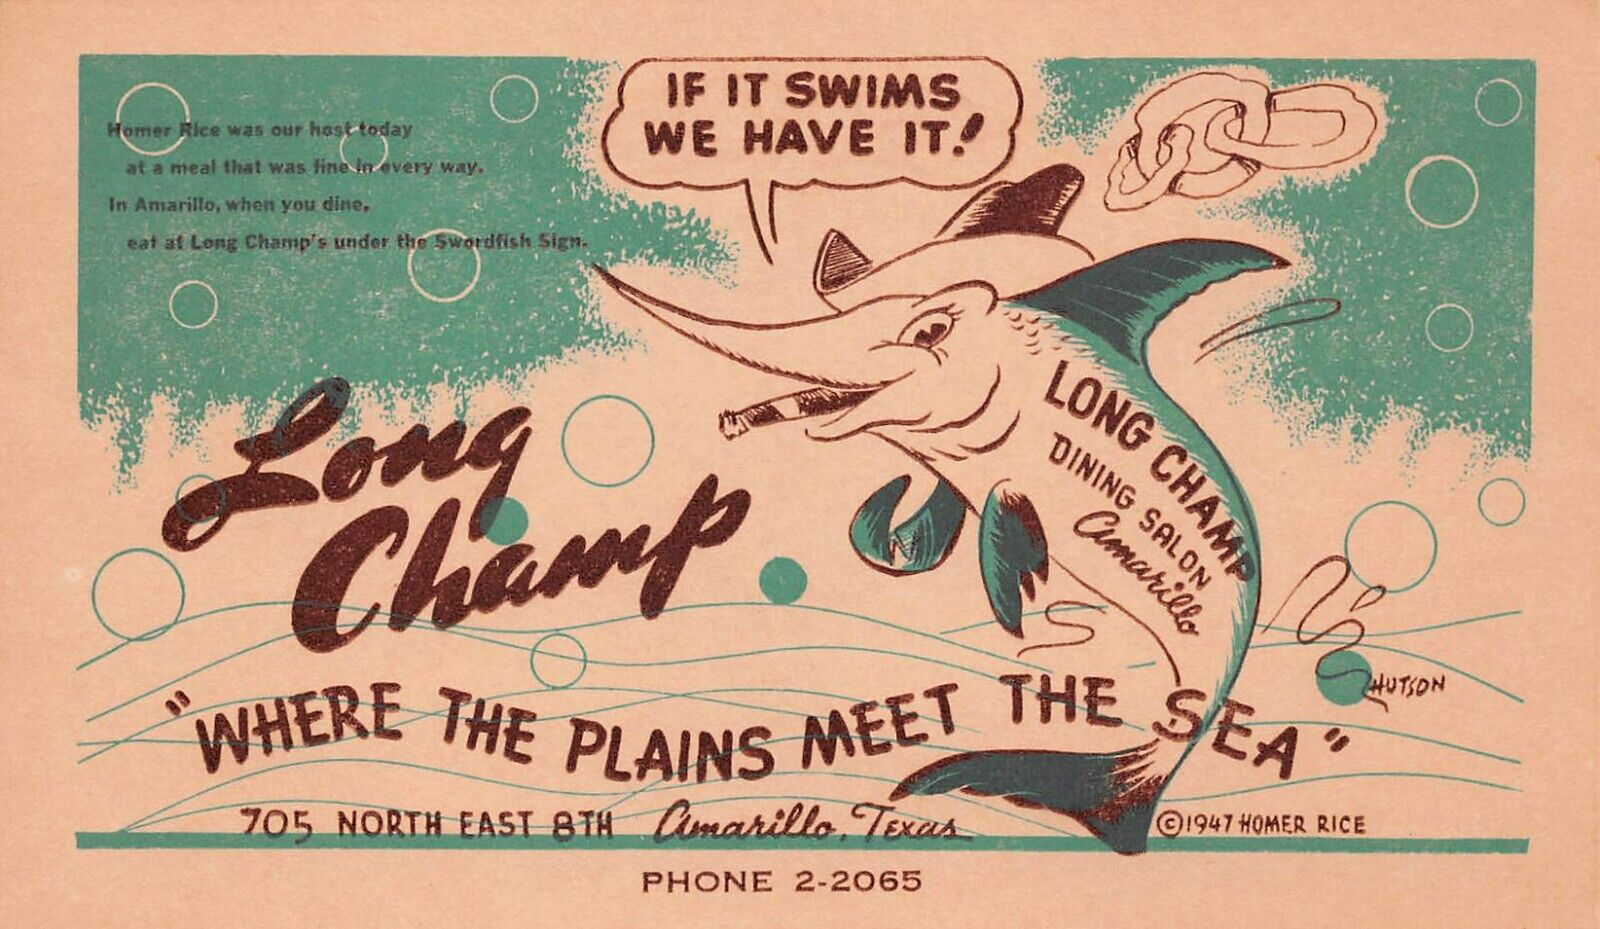 Amarillo TX Texas Long Champ Longchamp Restaurant Advertising Vtg Postcard A39